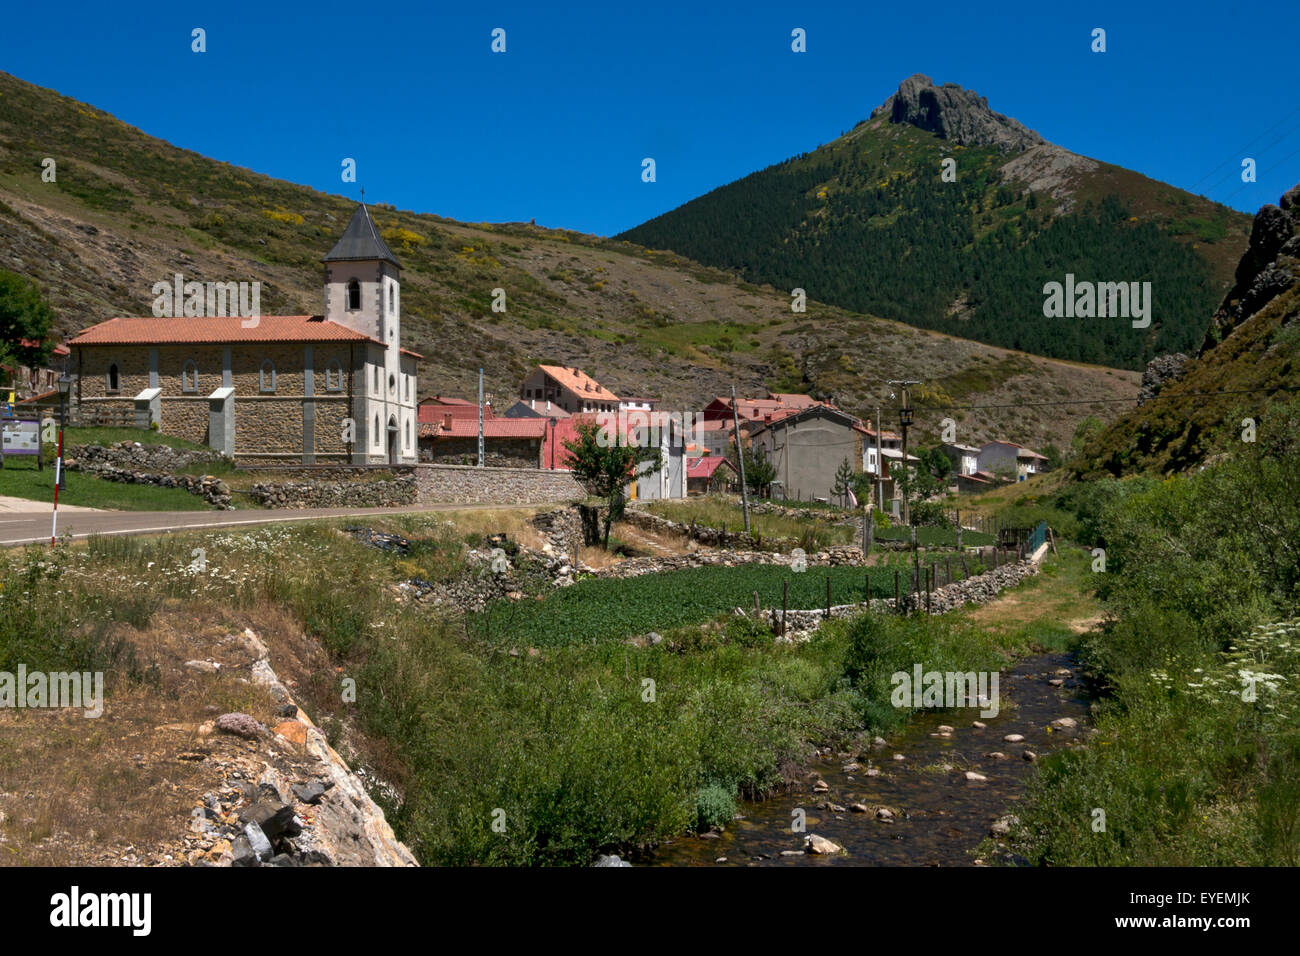 Village rural de Llanaves en collines de Picos de Europa,Asturies,le nord de l'Espagne Banque D'Images